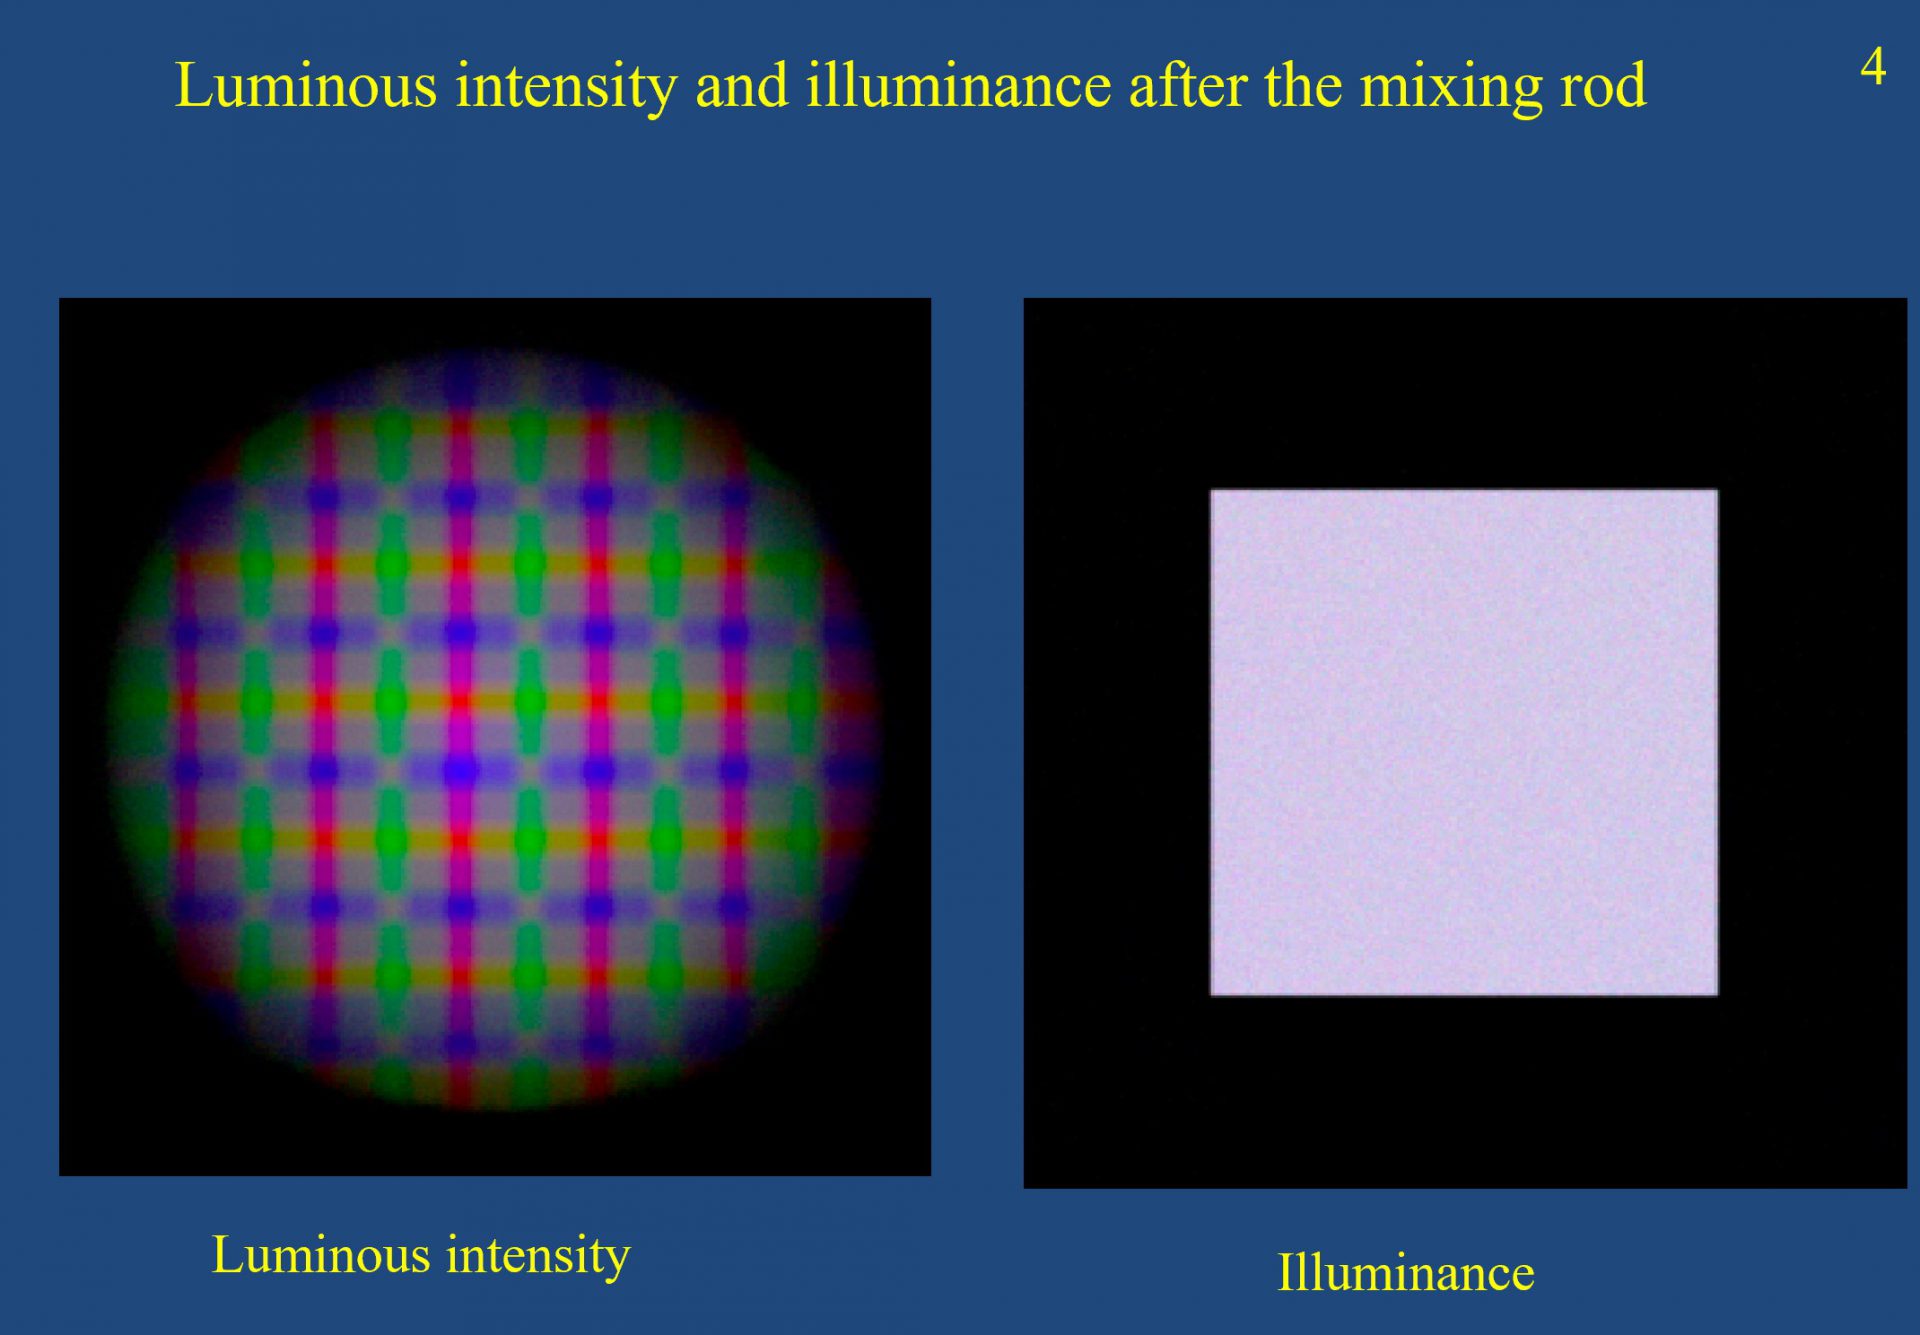 Luminence and illuminance after the mixing rod